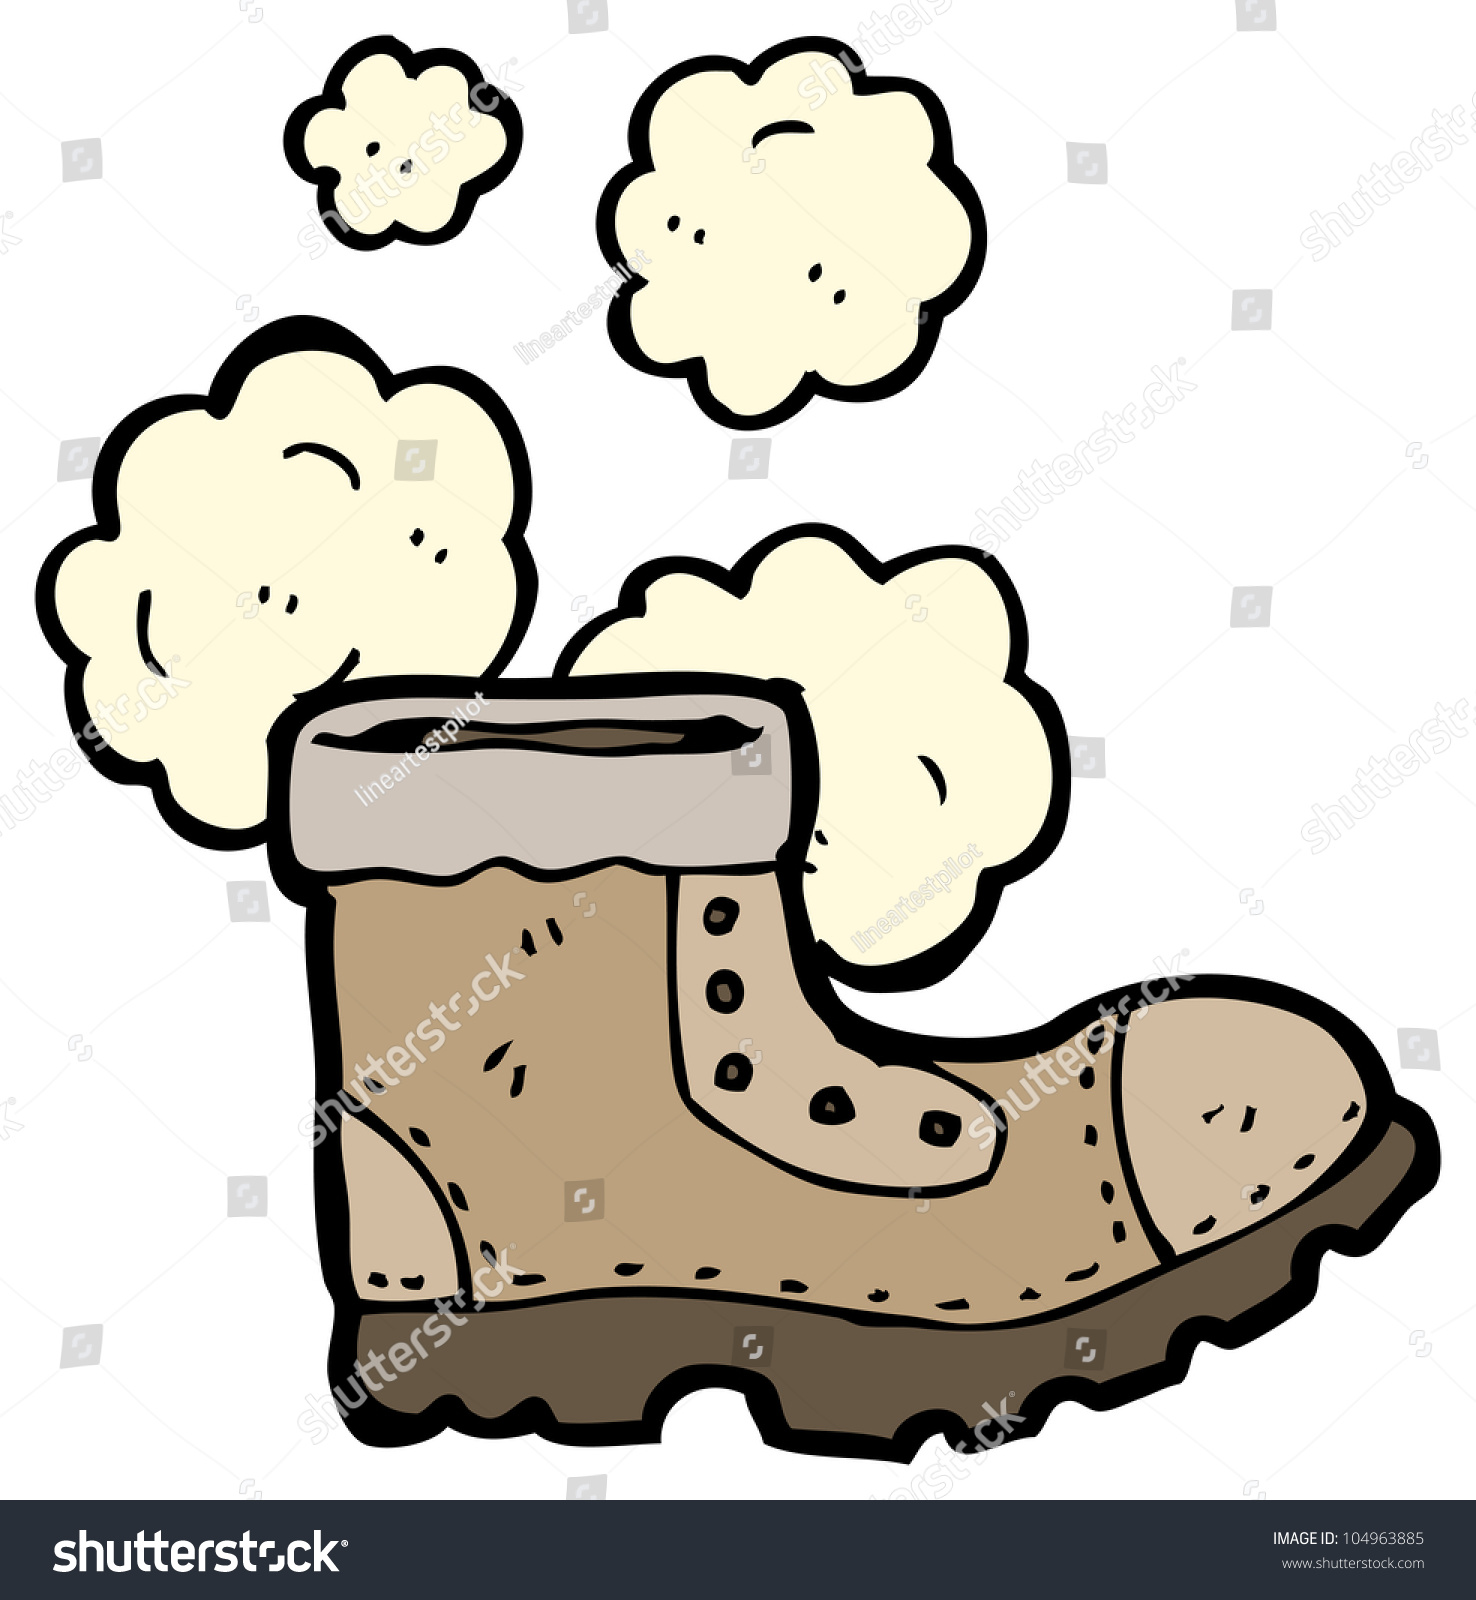 Dusty Old Boot Cartoon Stock Photo 104963885 : Shutterstock